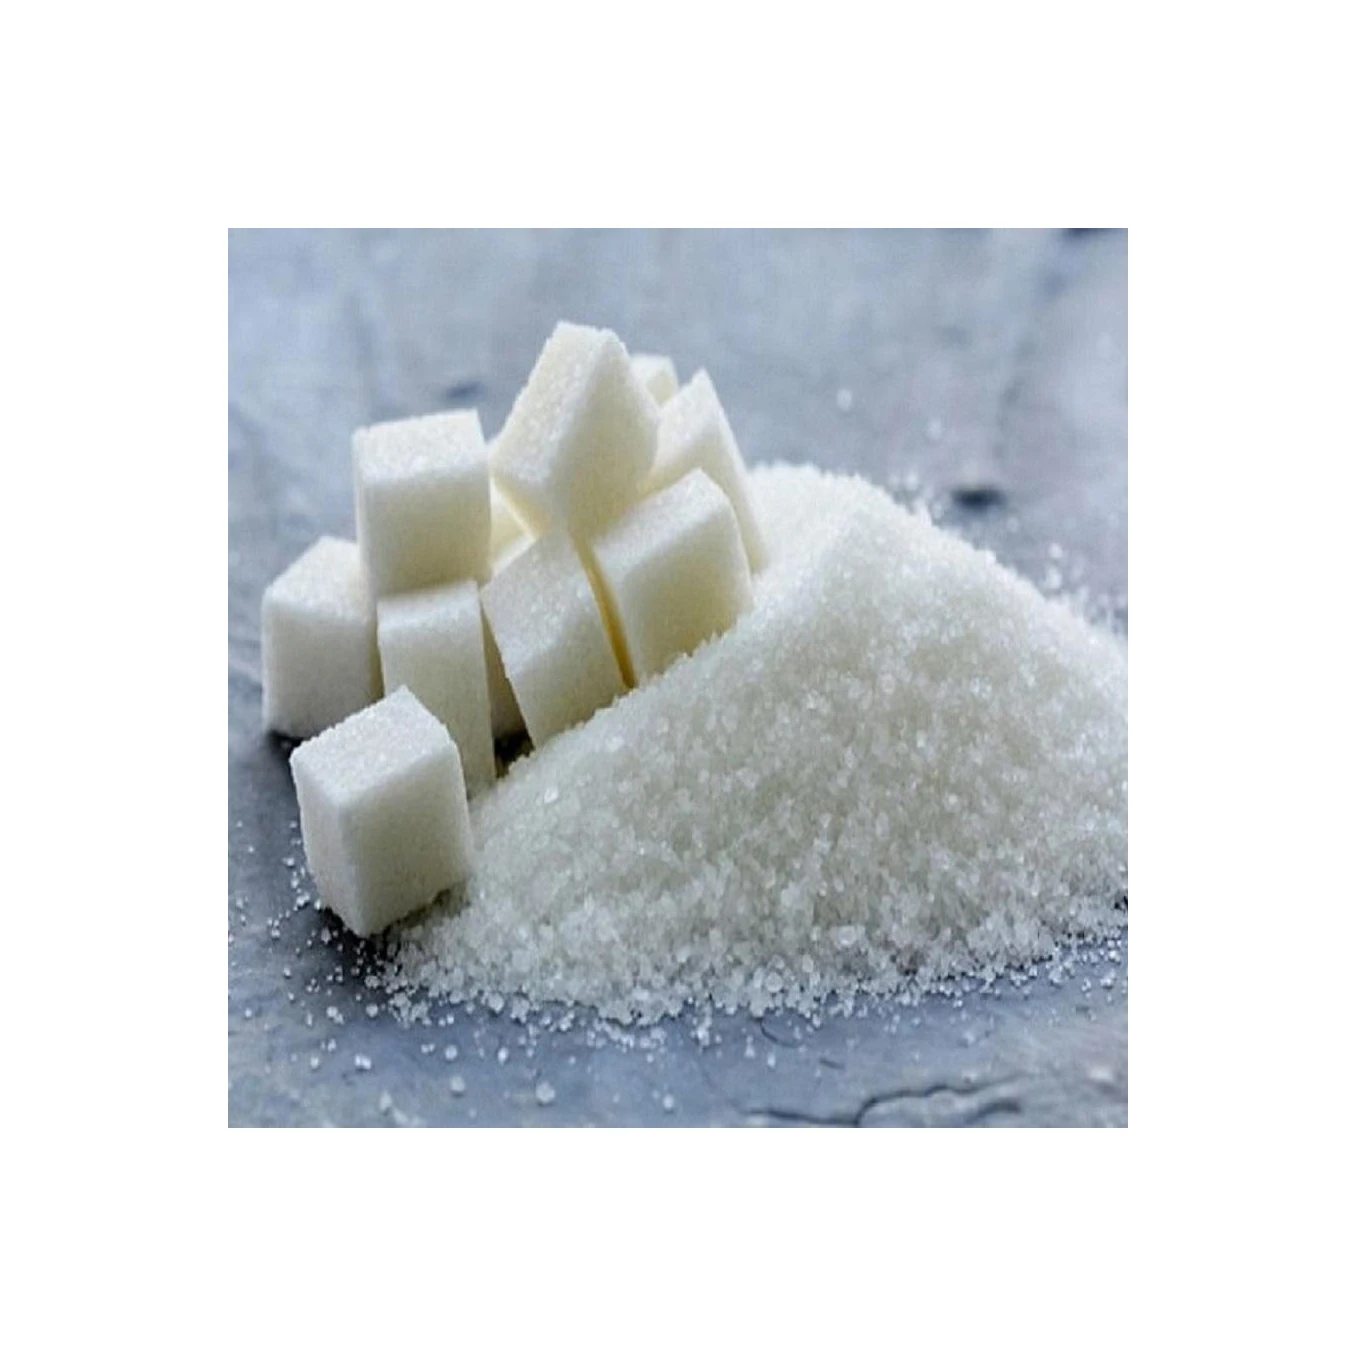 Refined ICUMSA 45 Sugar / Crystal White Sugar White Granulated Sugar ICUMSA 45 / White Cane Icumsa 45 Sugar for Sale (11000006833136)